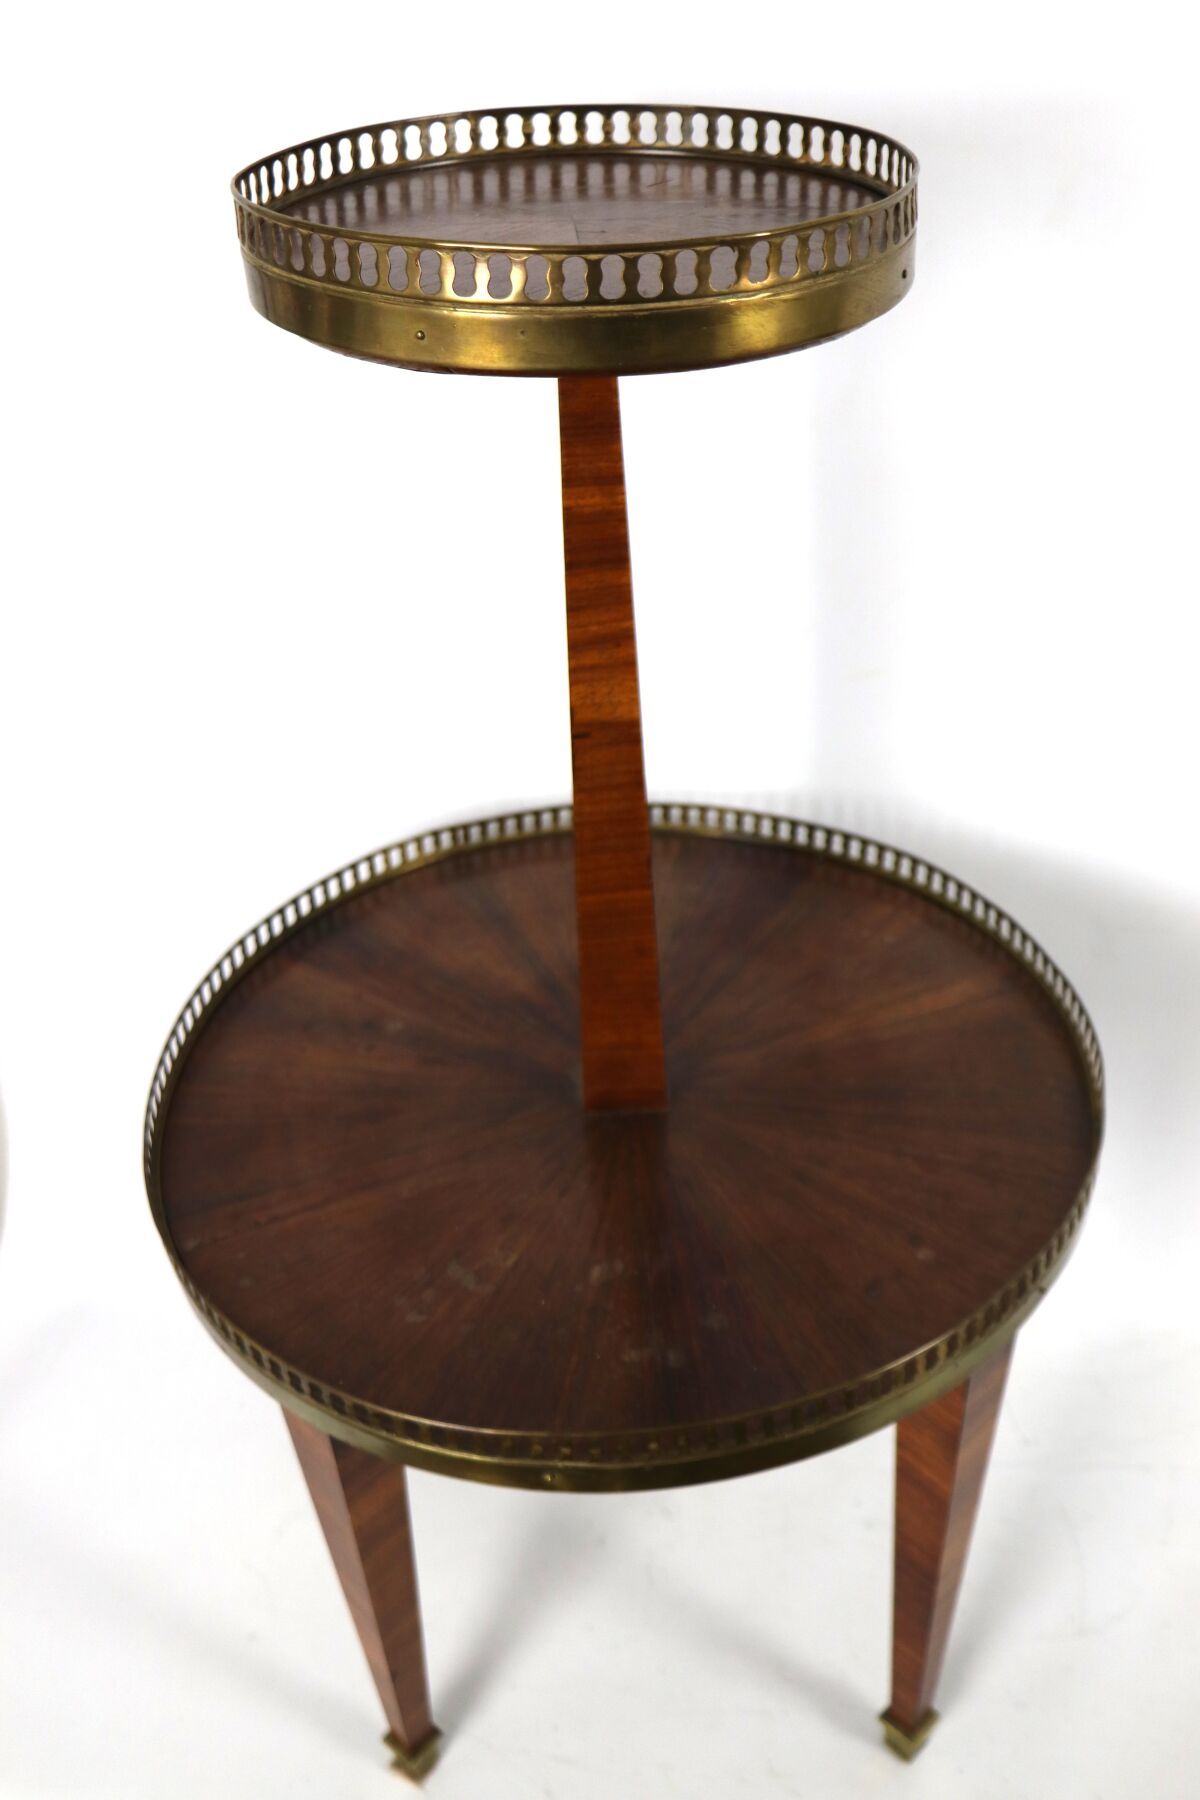 Null 双层桃花心木贴面的基座桌，有两个黄铜廊顶，放在四个锥形的腿上。
路易十六风格，19世纪末。
高_77厘米，深_44厘米，单板略微凸起，有浅色污渍。